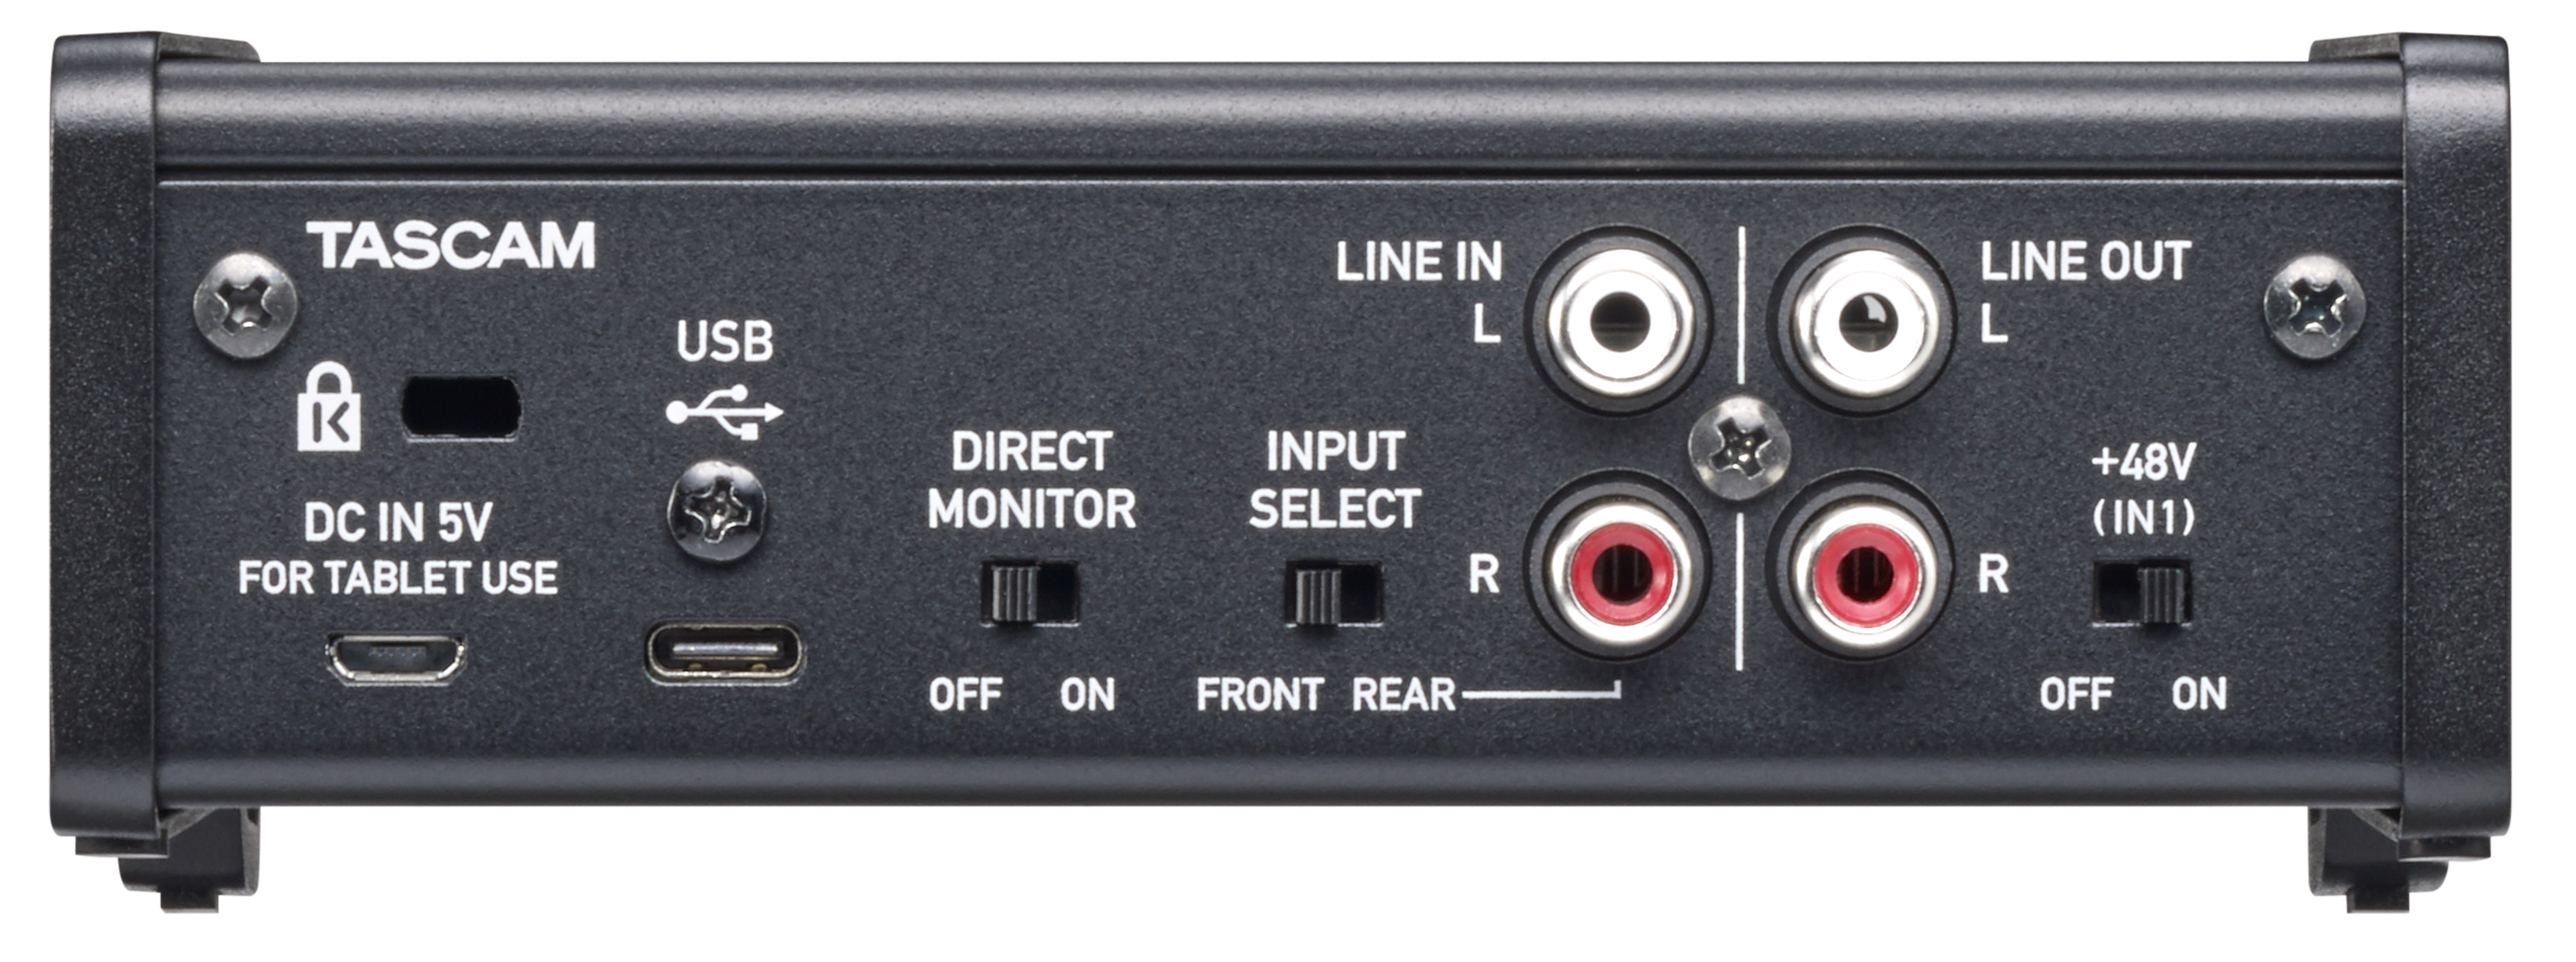 Tascam Us-1x2hr - USB audio interface - Variation 2